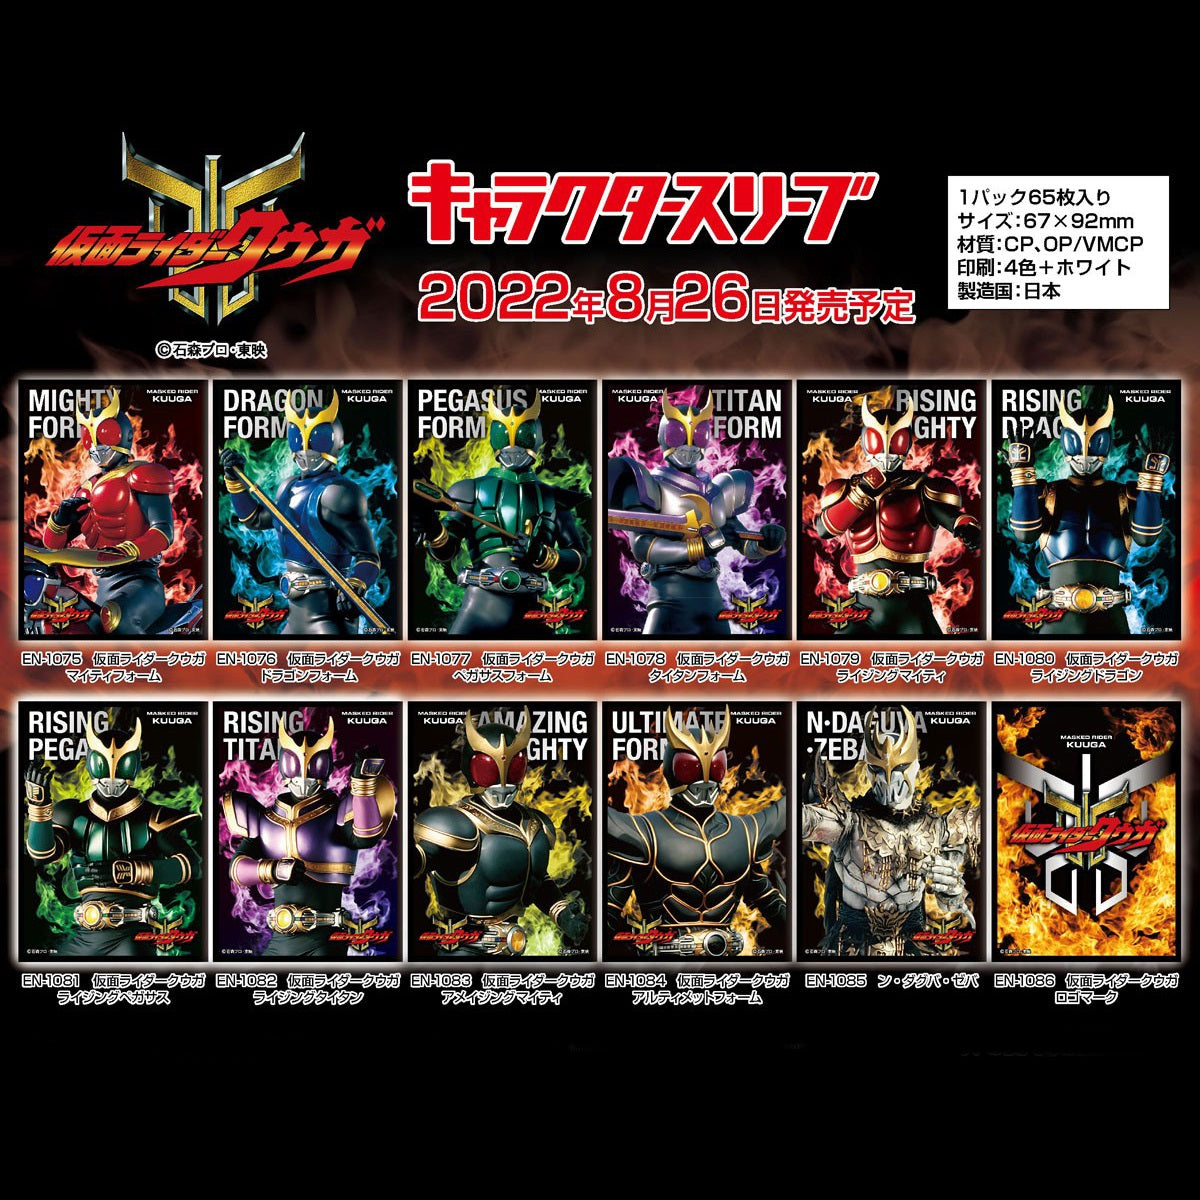 Kamen Rider Kuuga Character Sleeve Collection [EN-1081] "Rising Pegasus"-Ensky-Ace Cards & Collectibles